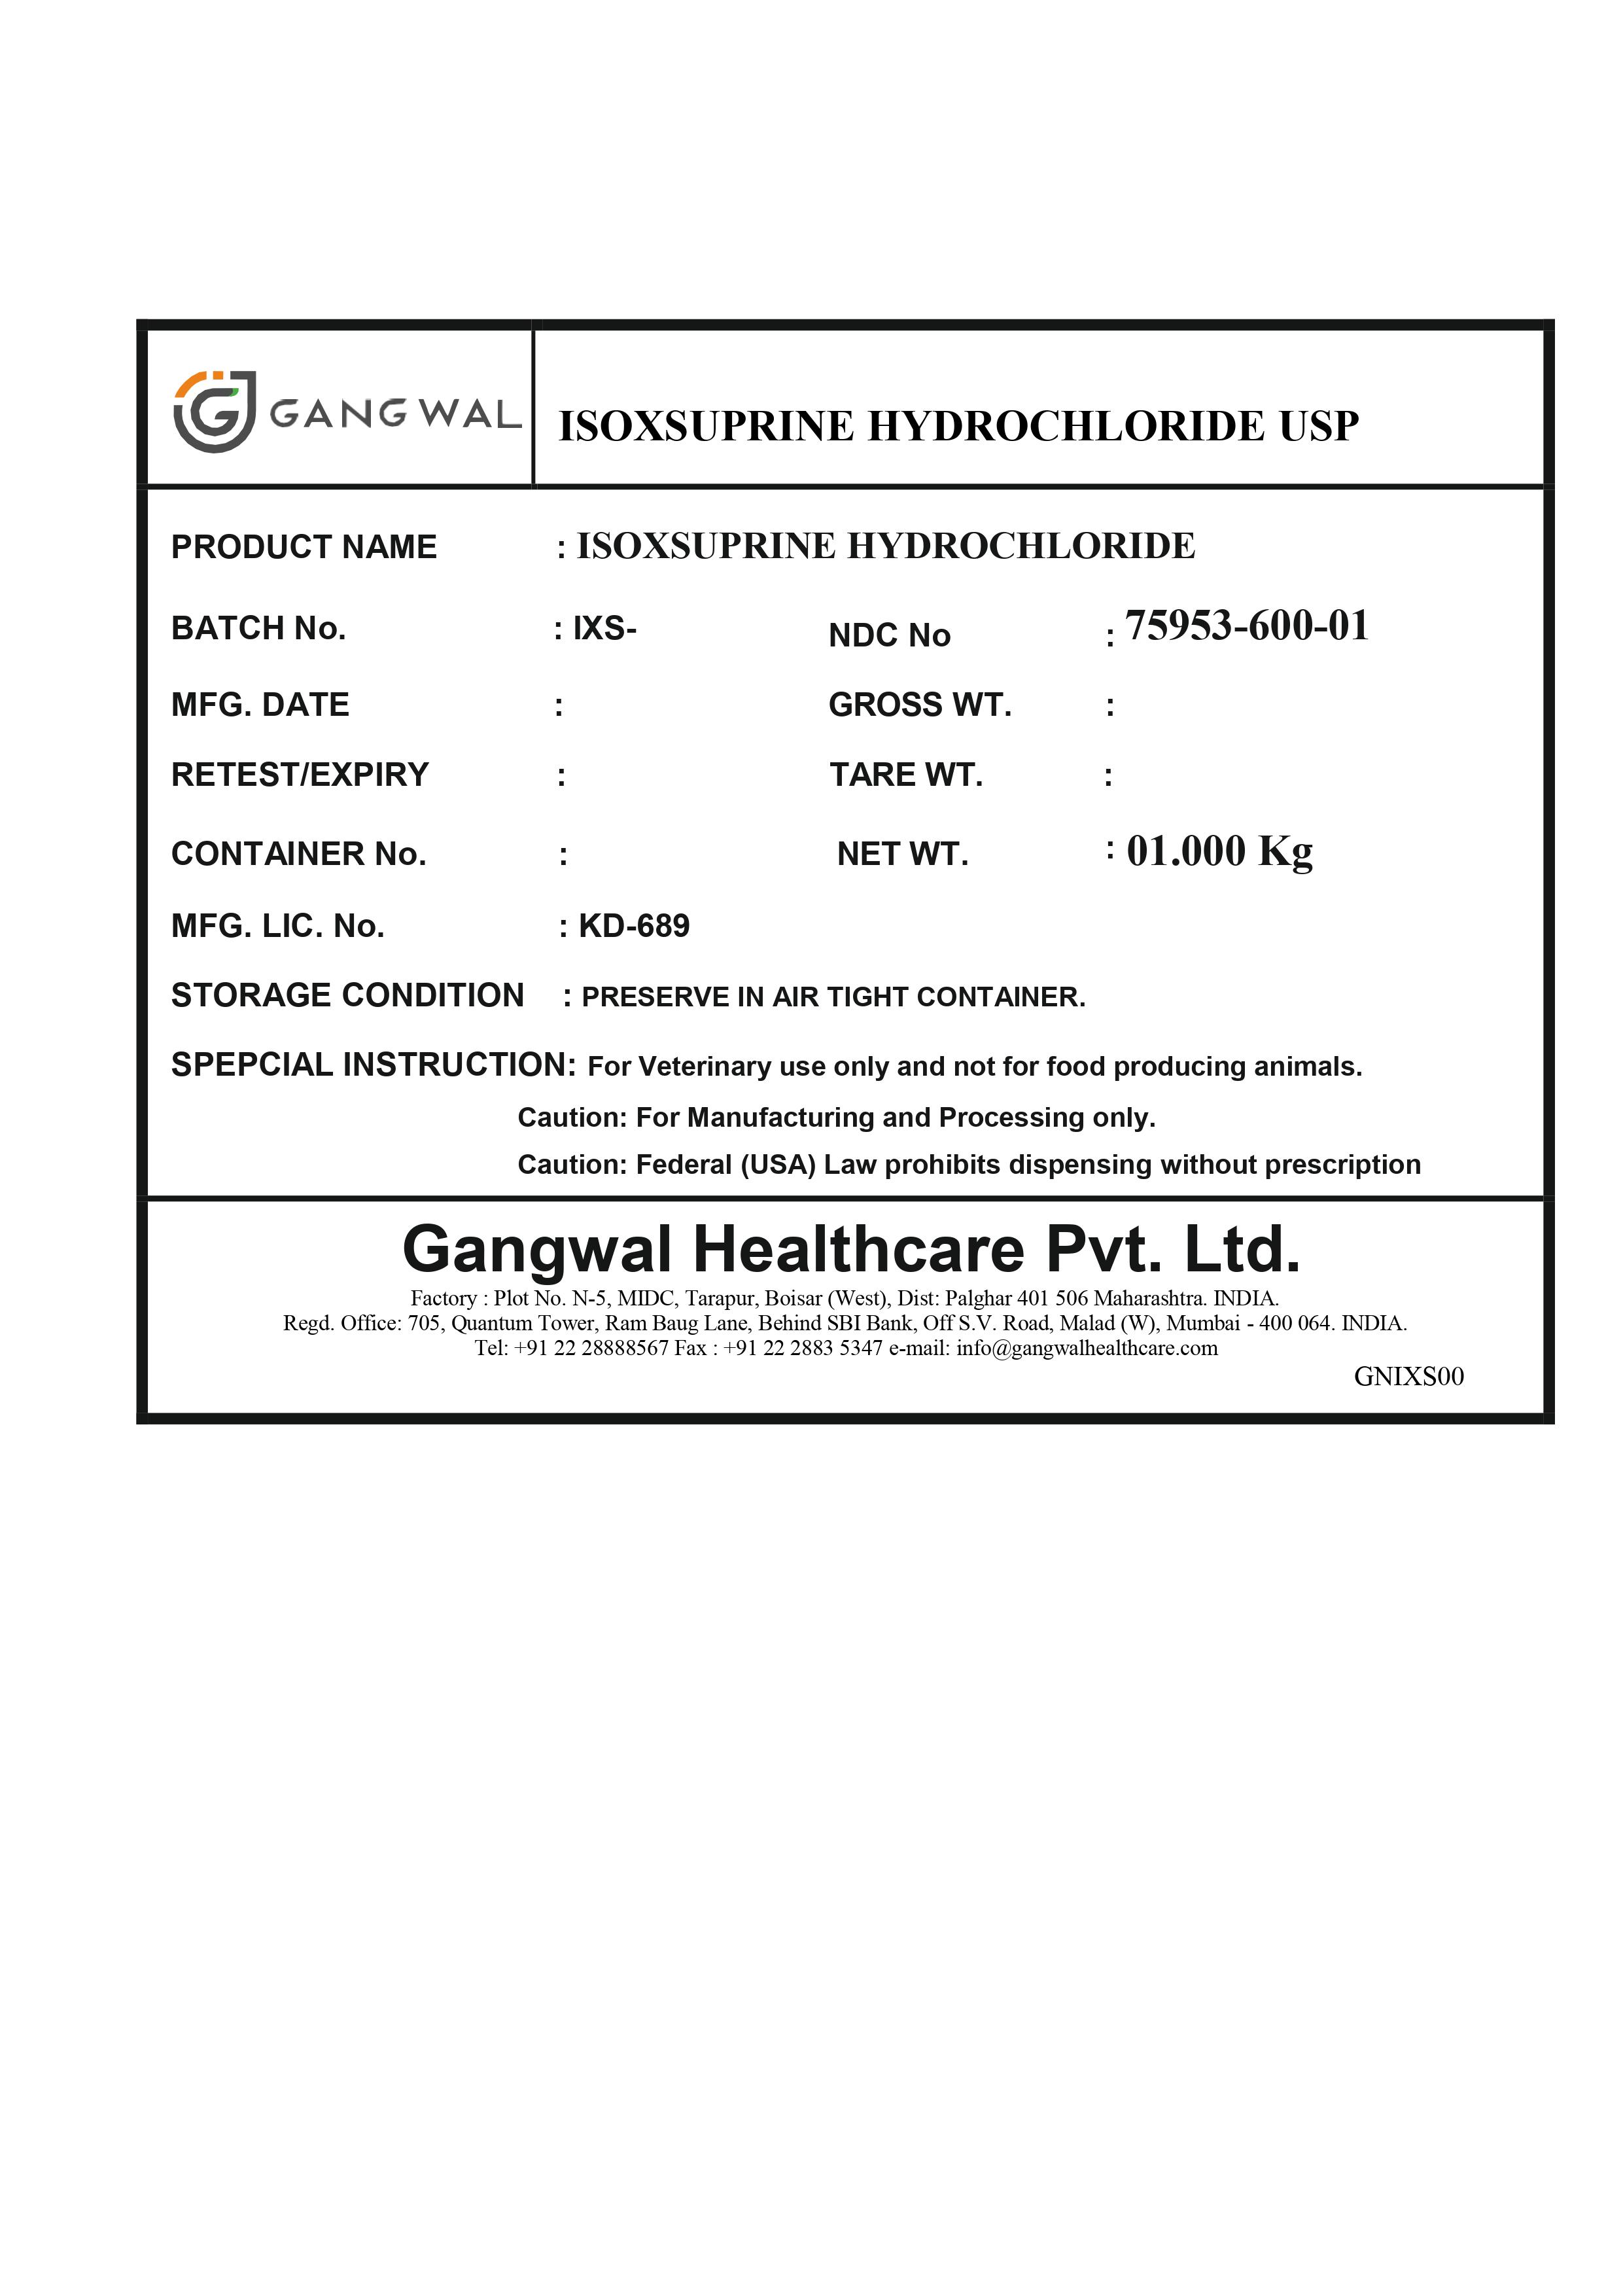 Isoxsuprine Hydrochloride USP - 1 Kg